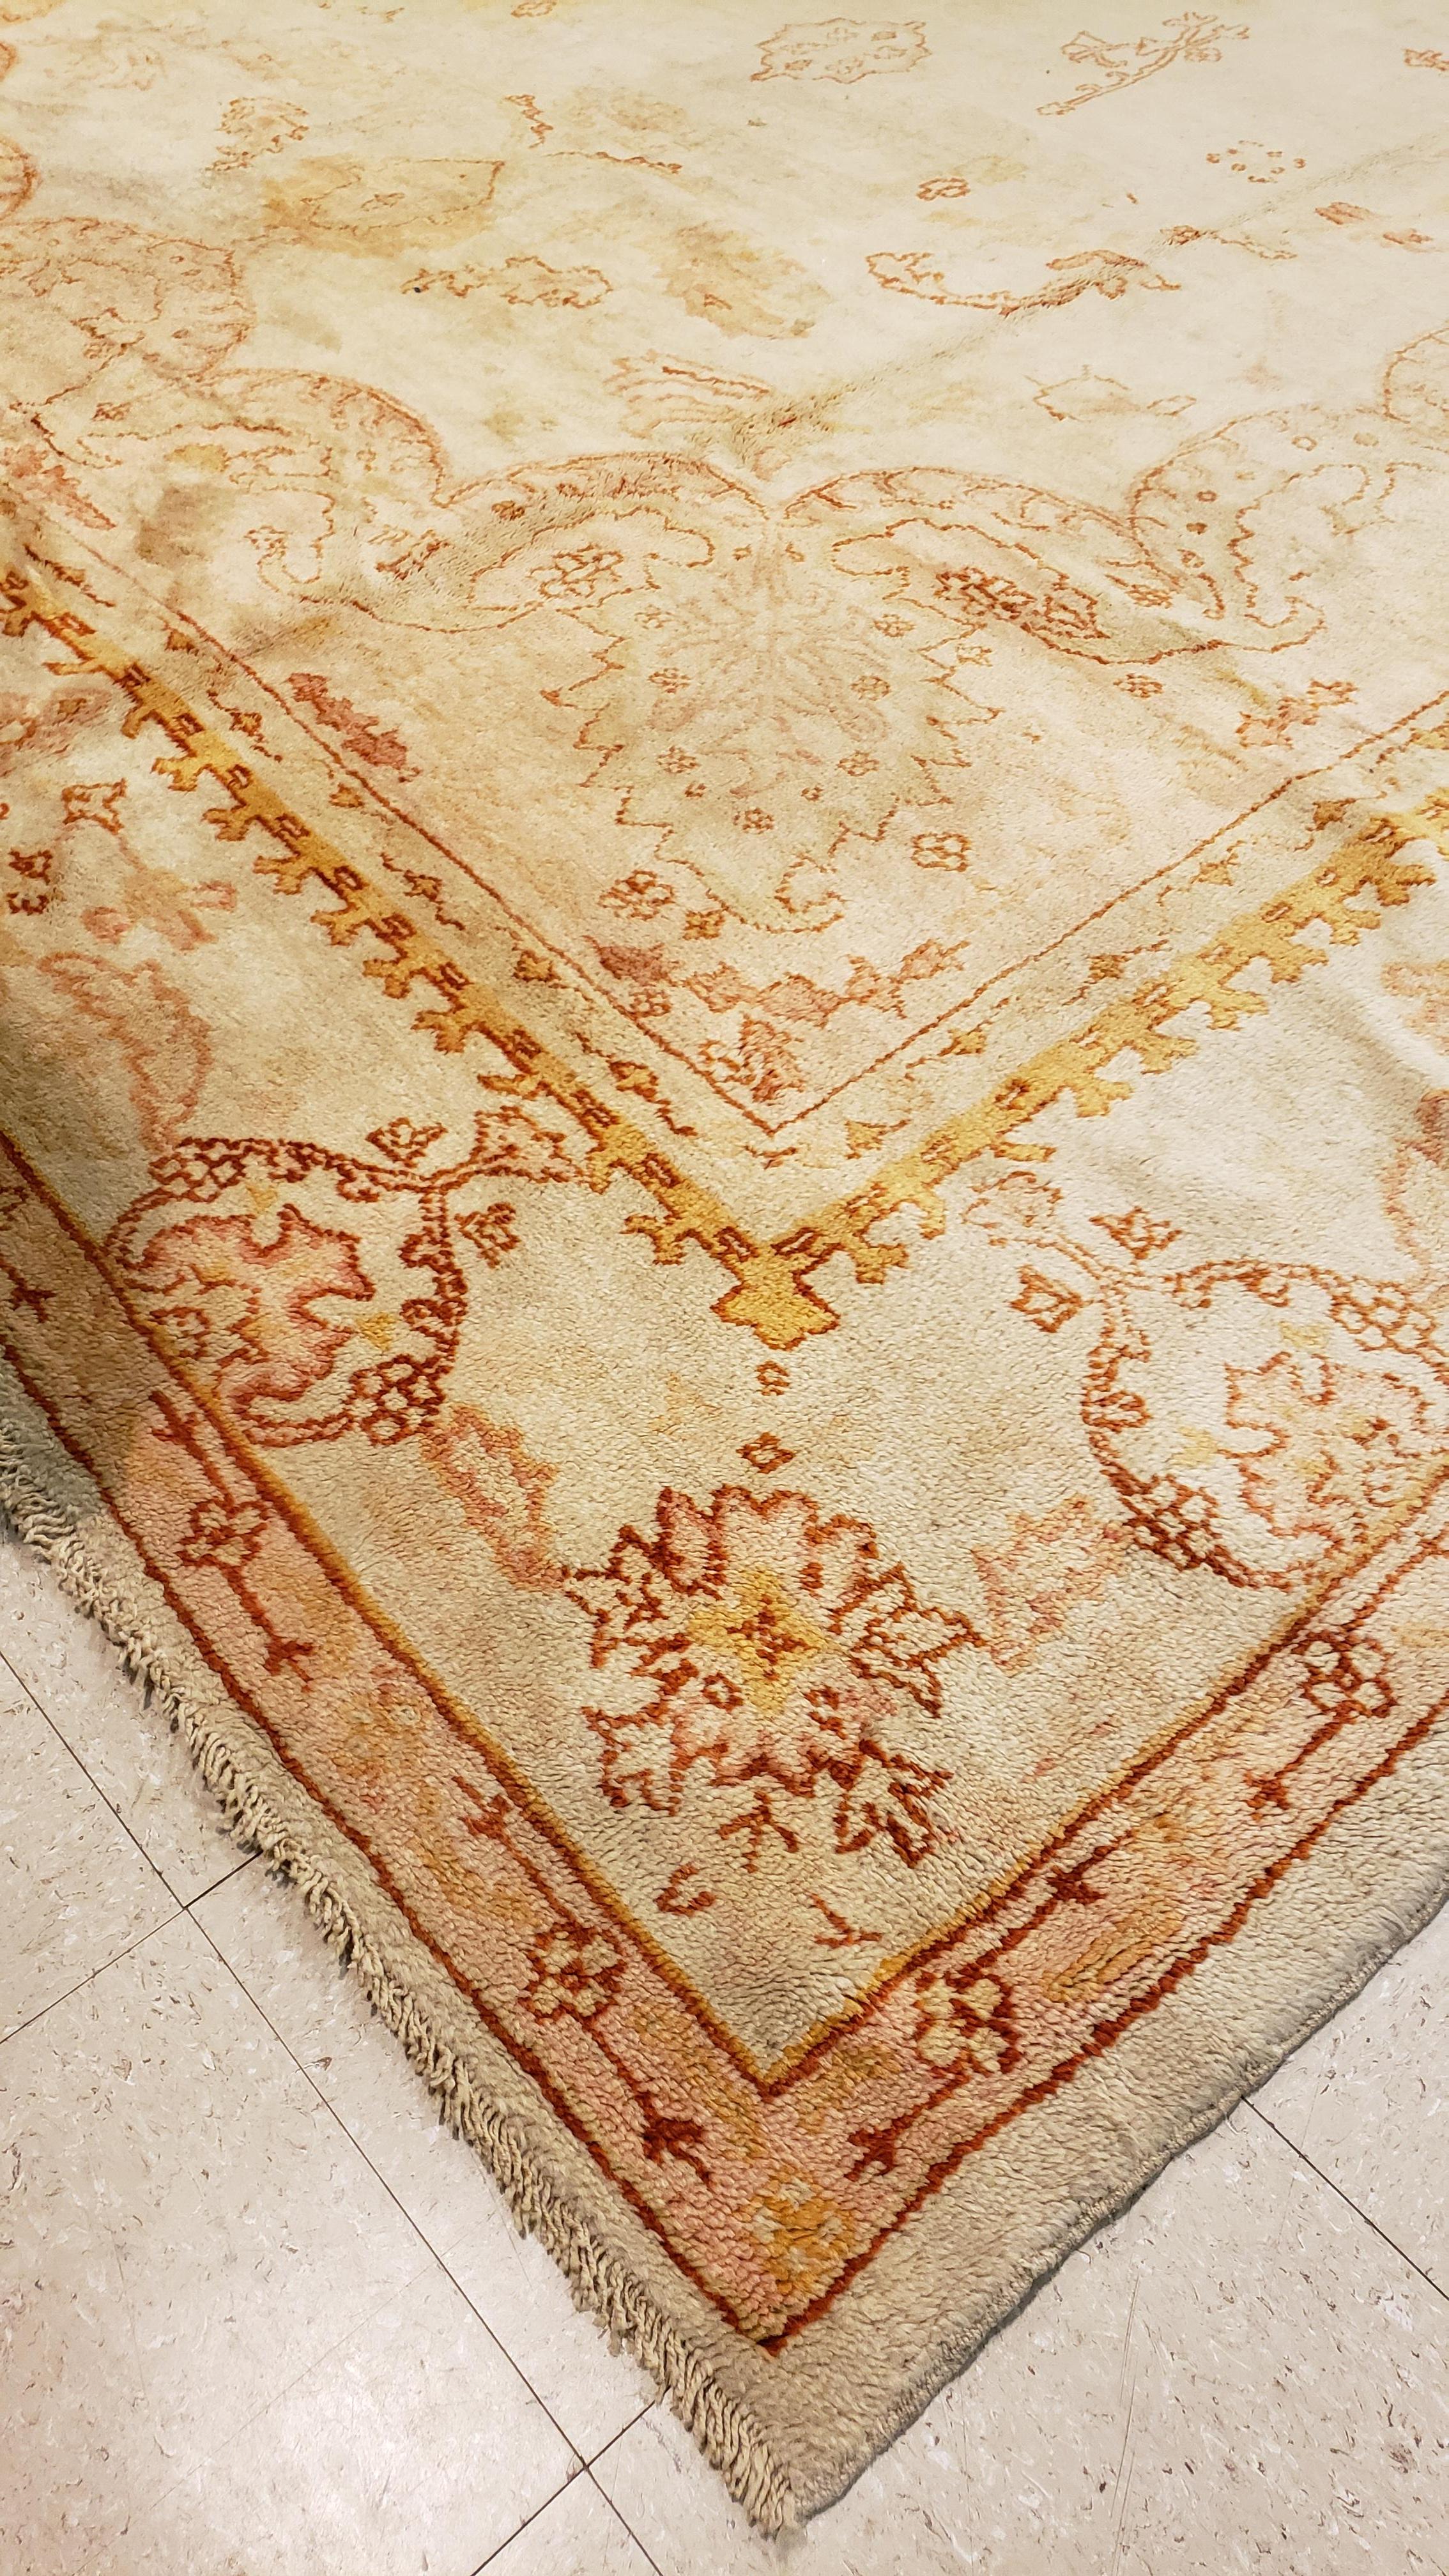 Antique Oushak Carpet, Handmade Turkish Oriental Rug, Beige, Taupe, Soft Salmon For Sale 4